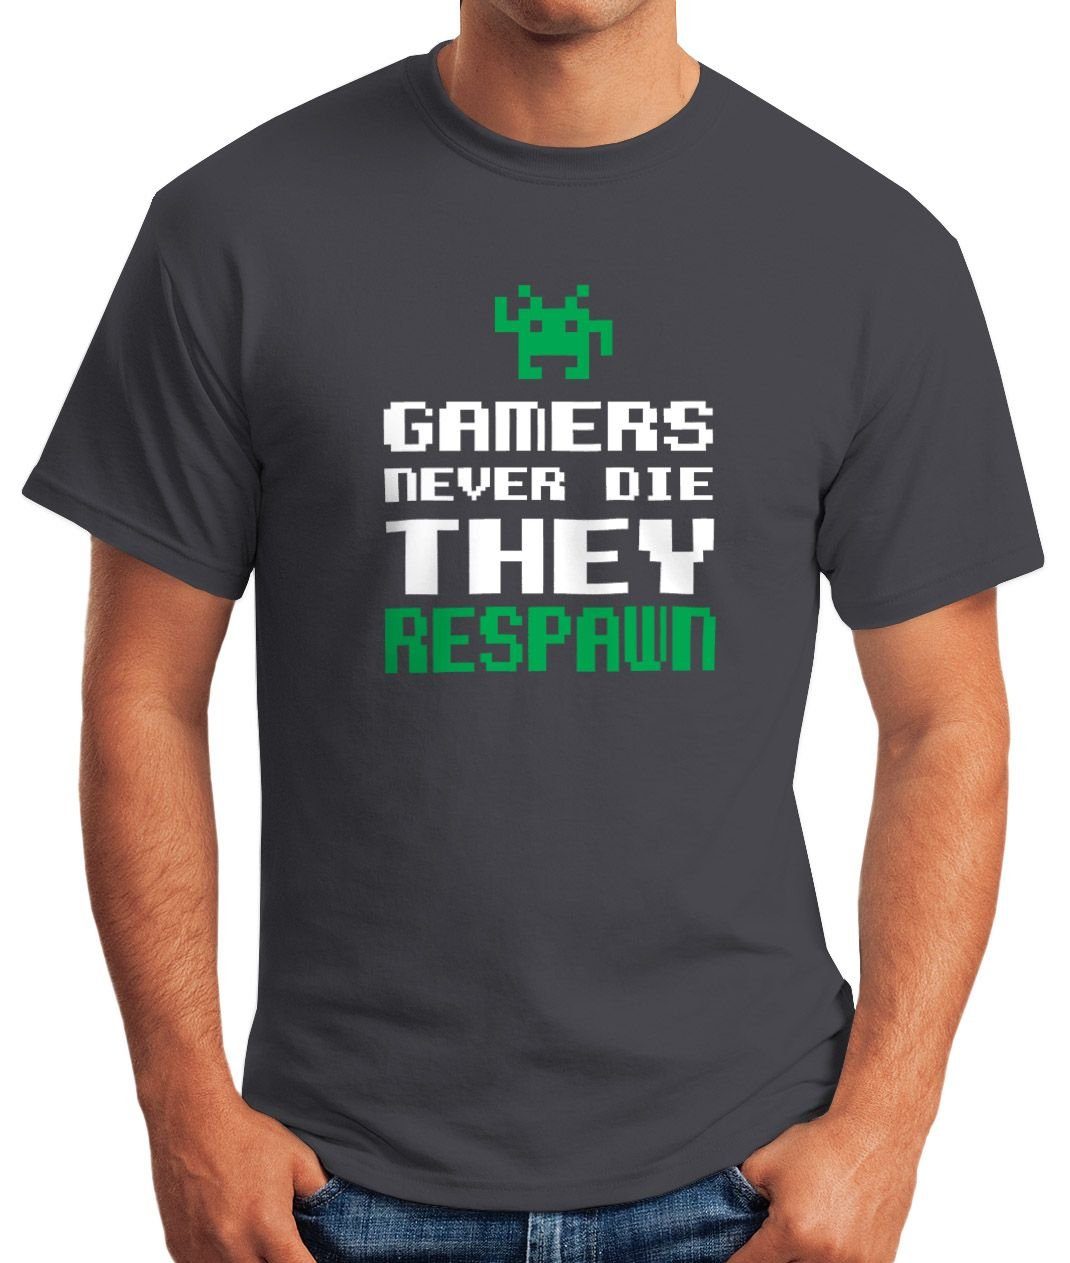 Zocker mit Pixel Gamers Retro MoonWorks Spruch Fun-Shirt they never 80er Print-Shirt Moonworks® 90er grau T-Shirt die Print respawn Herren